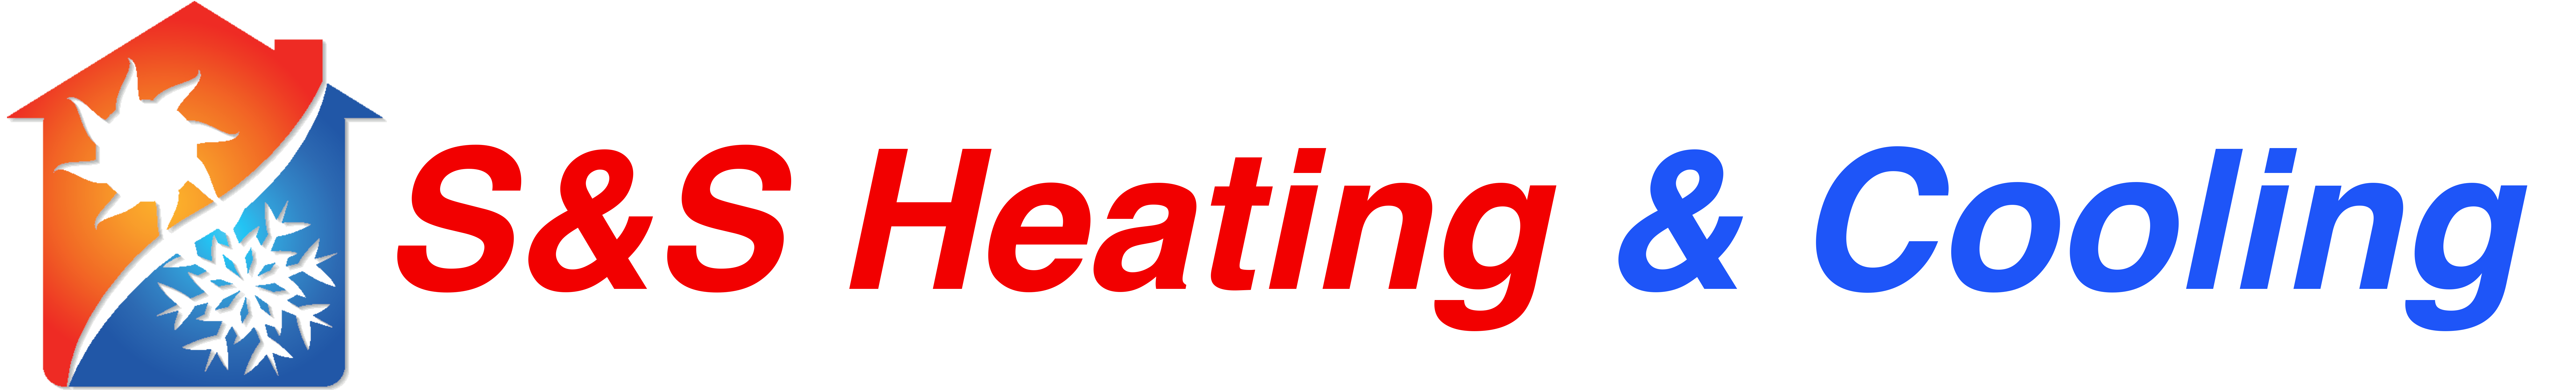 S&S Heating & Cooling, LLC Logo